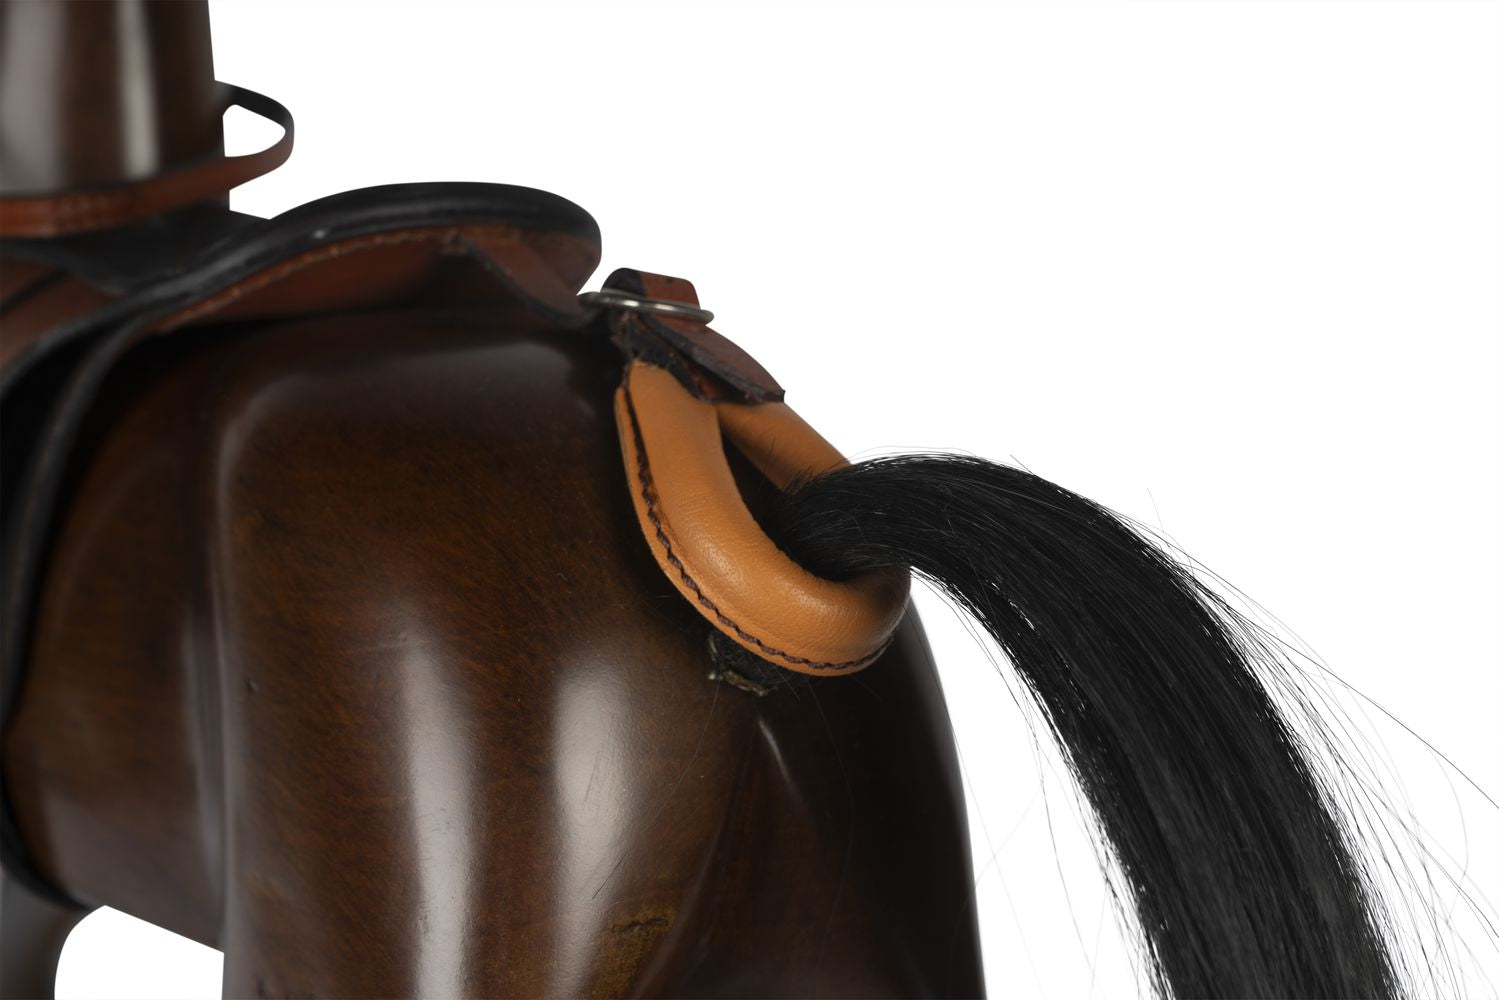 Authentic Models Victorian Swing Horse, mörkbrun